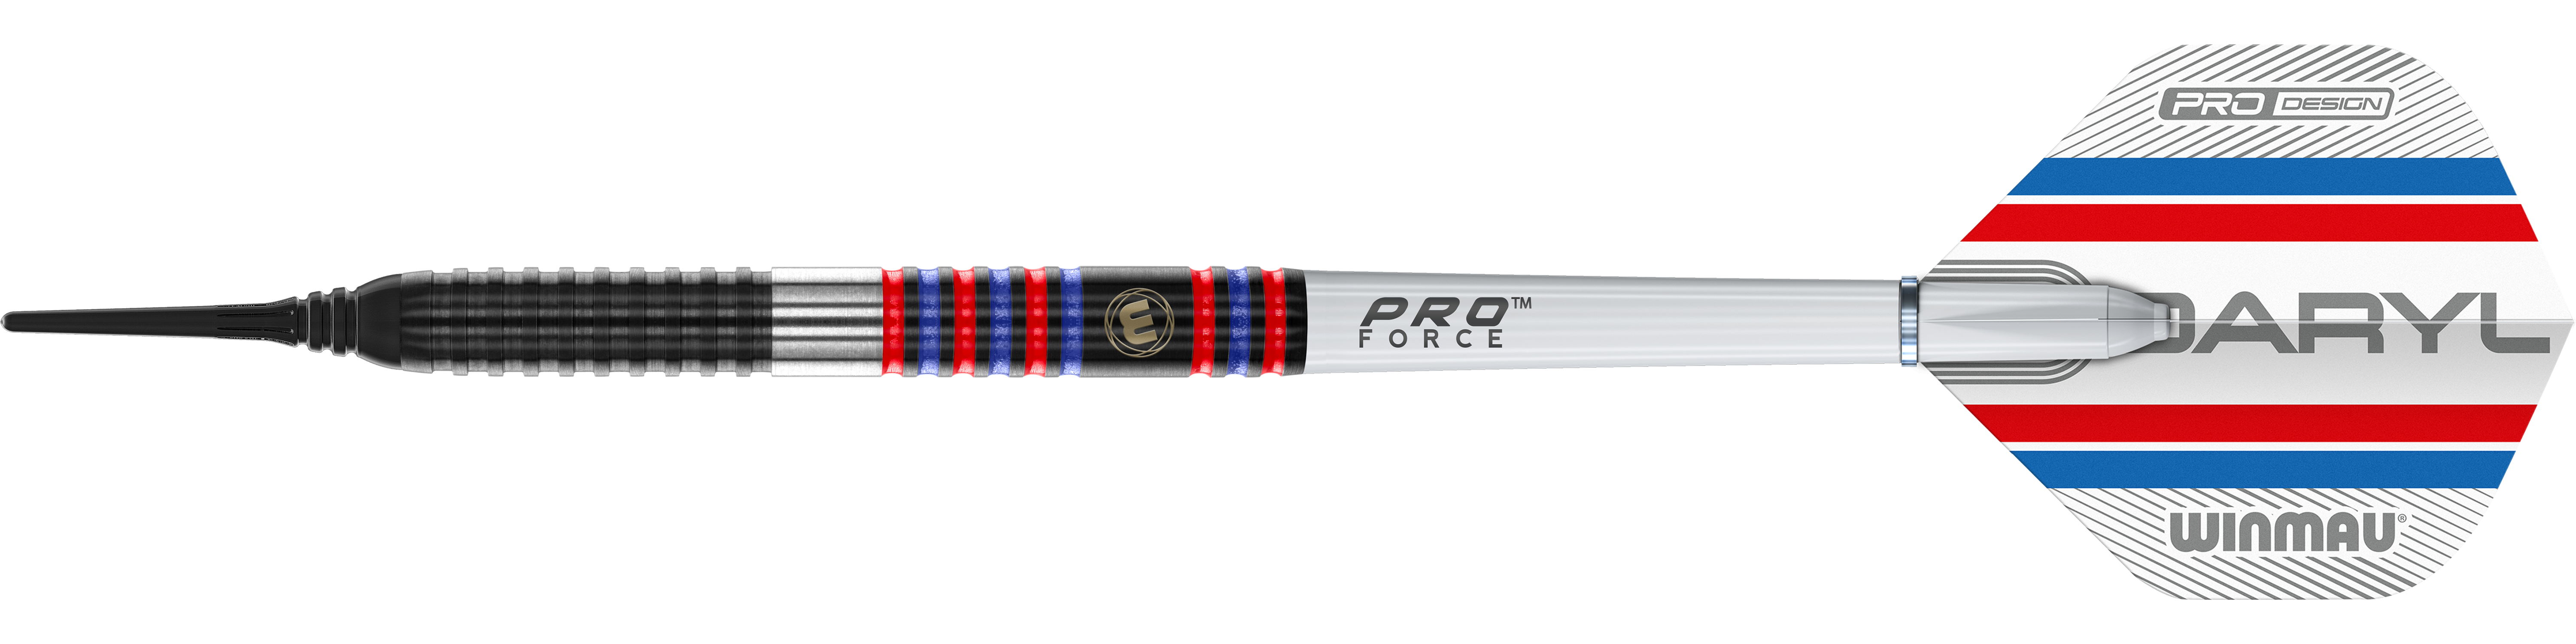 Winmau Daryl Gurney 85 Pro-Series Softdarts - 20g